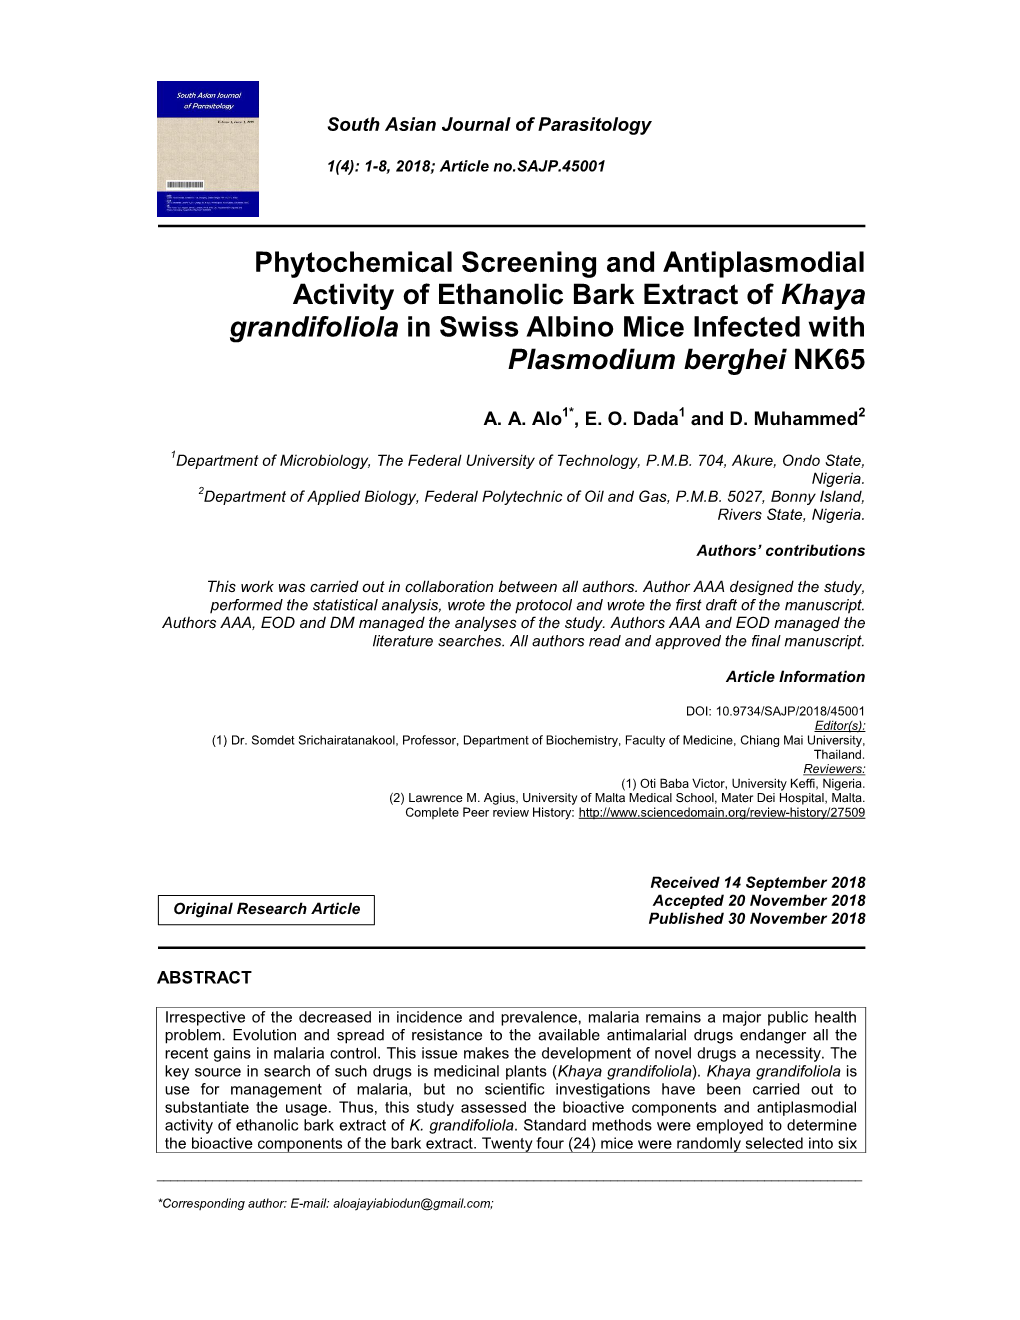 Phytochemical Screening and Antiplasmodial Activity of Ethanolic Bark Extract of Khaya Grandifoliola in Swiss Albino Mice Infected with Plasmodium Berghei NK65